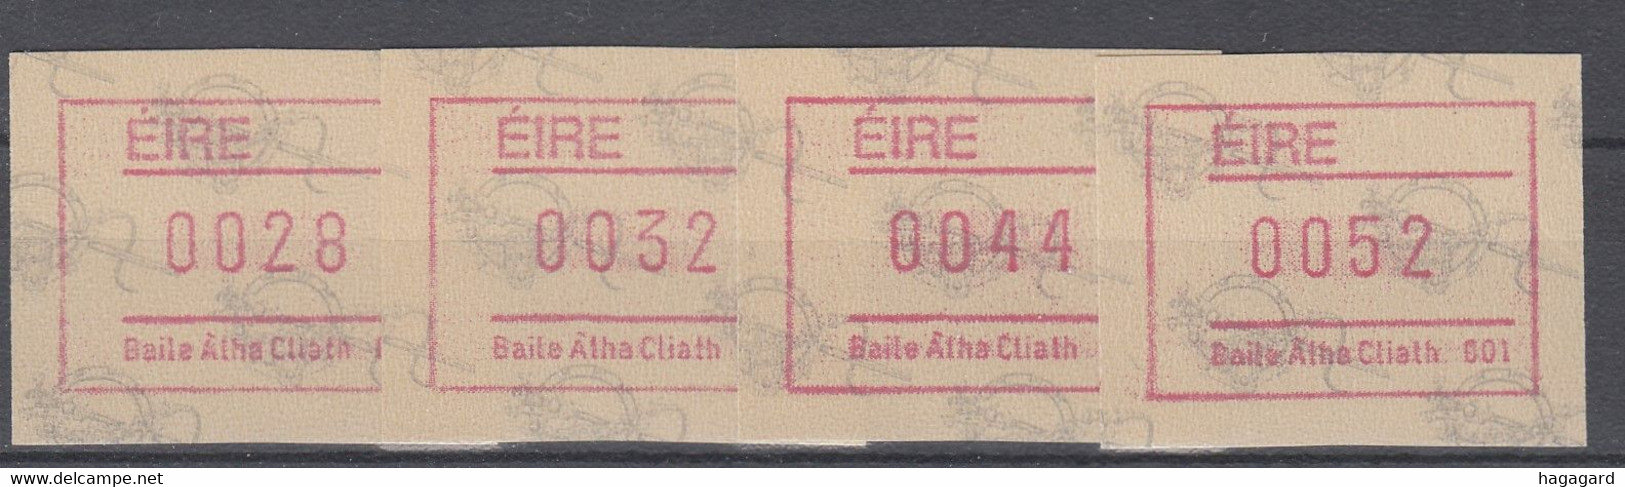 O B2013. Ireland 1992. ATM. 4 Items. Michel 4. MNH(**) - Vignettes D'affranchissement (Frama)